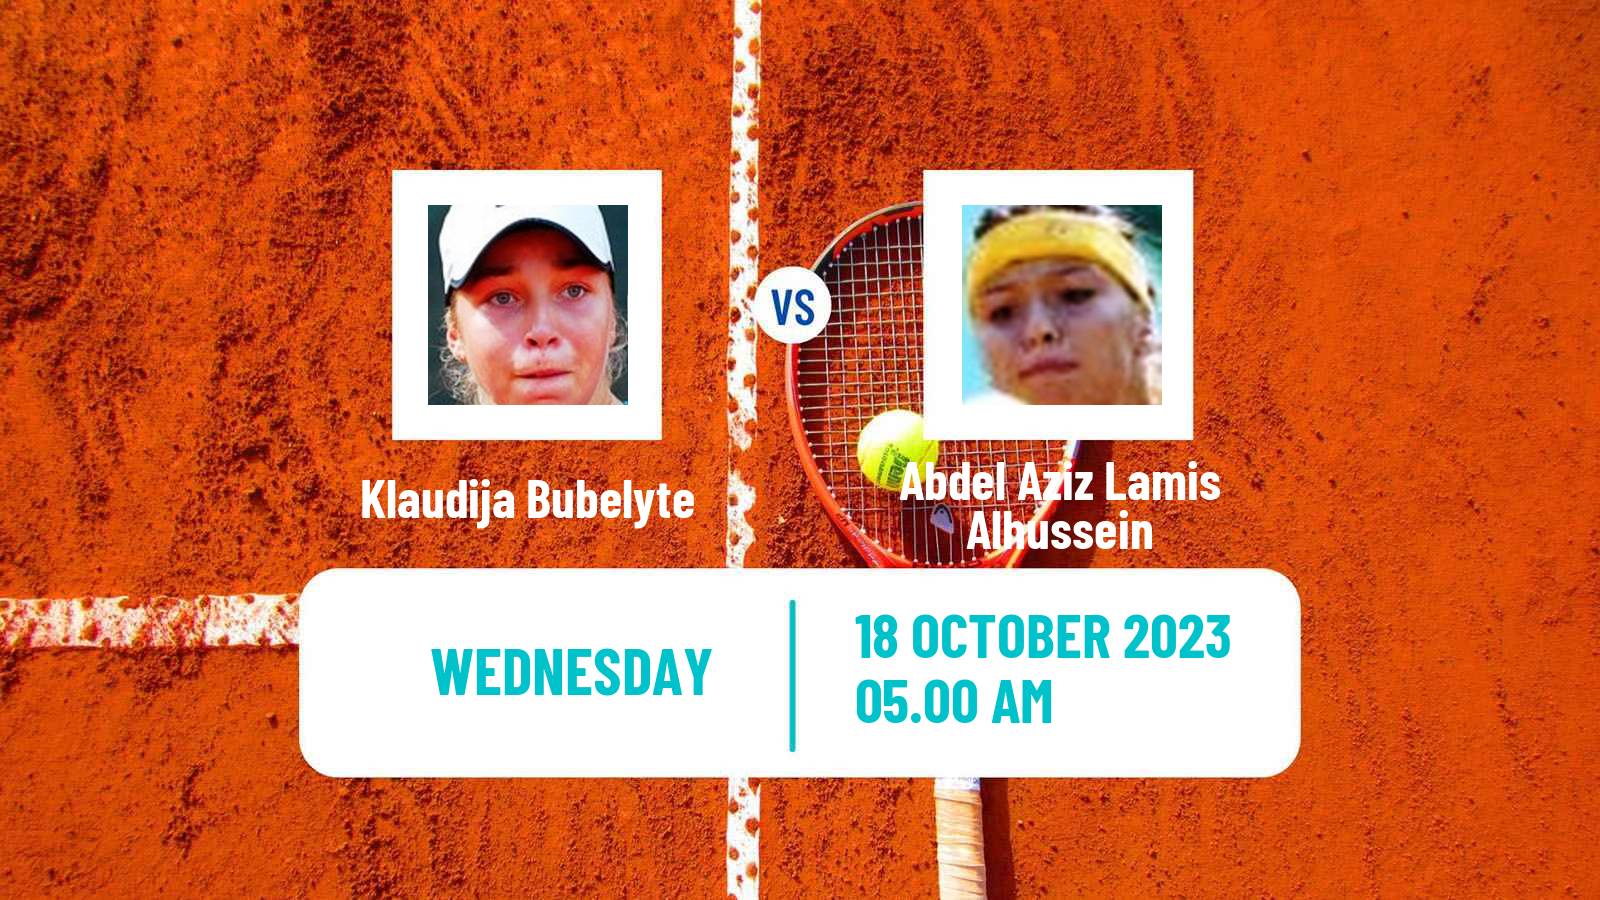 Tennis ITF W15 Sharm Elsheikh 22 Women Klaudija Bubelyte - Abdel Aziz Lamis Alhussein